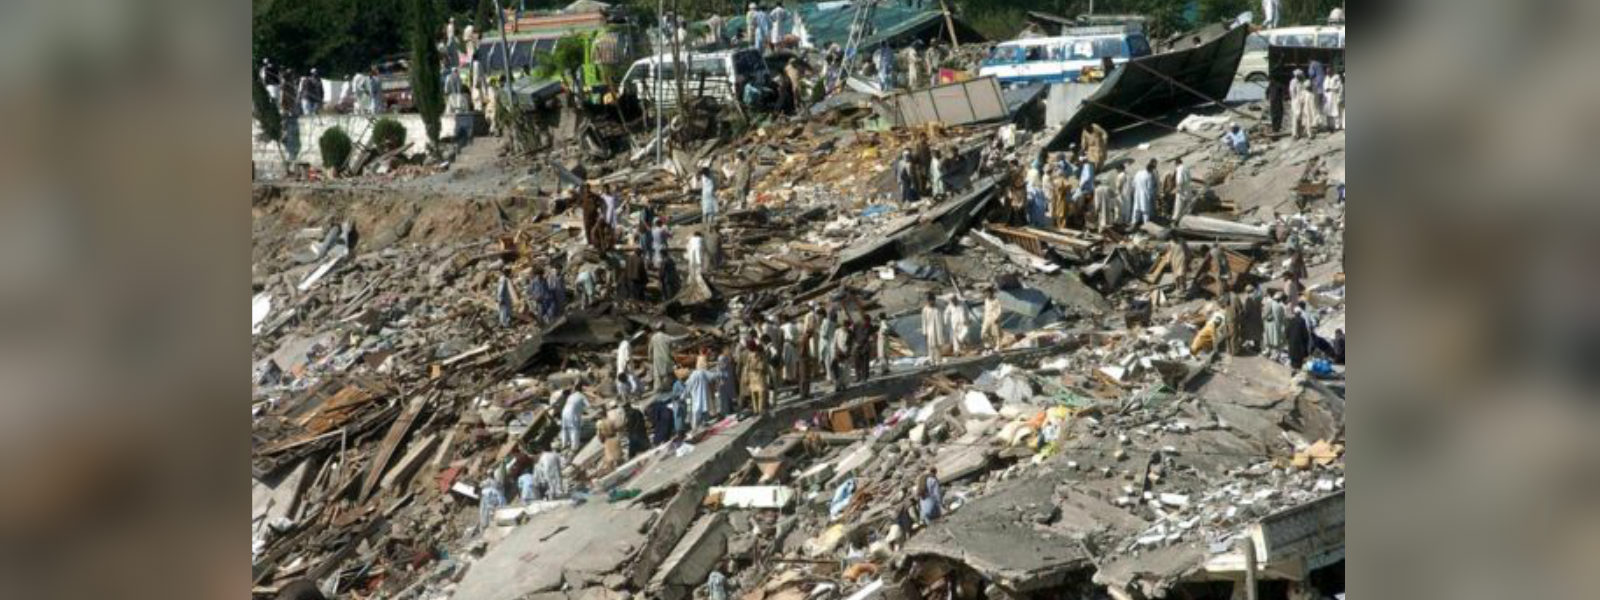 Eight dead, 100 hurt in 5.8 magnitude Pakistan quake